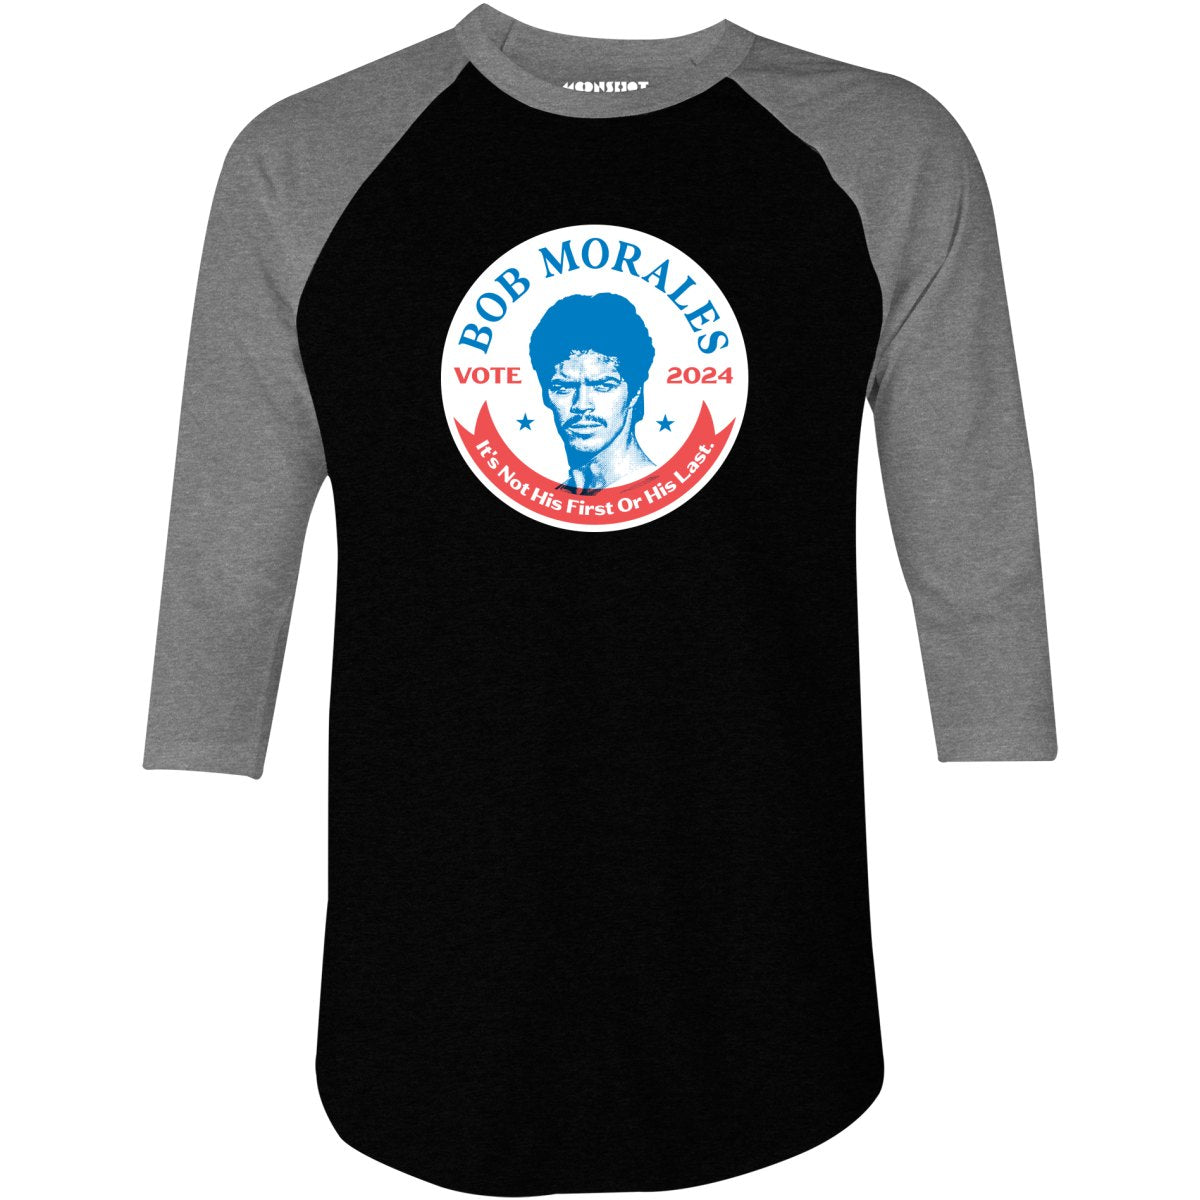 Bob Morales 2024 - Phony Campaign - 3/4 Sleeve Raglan T-Shirt